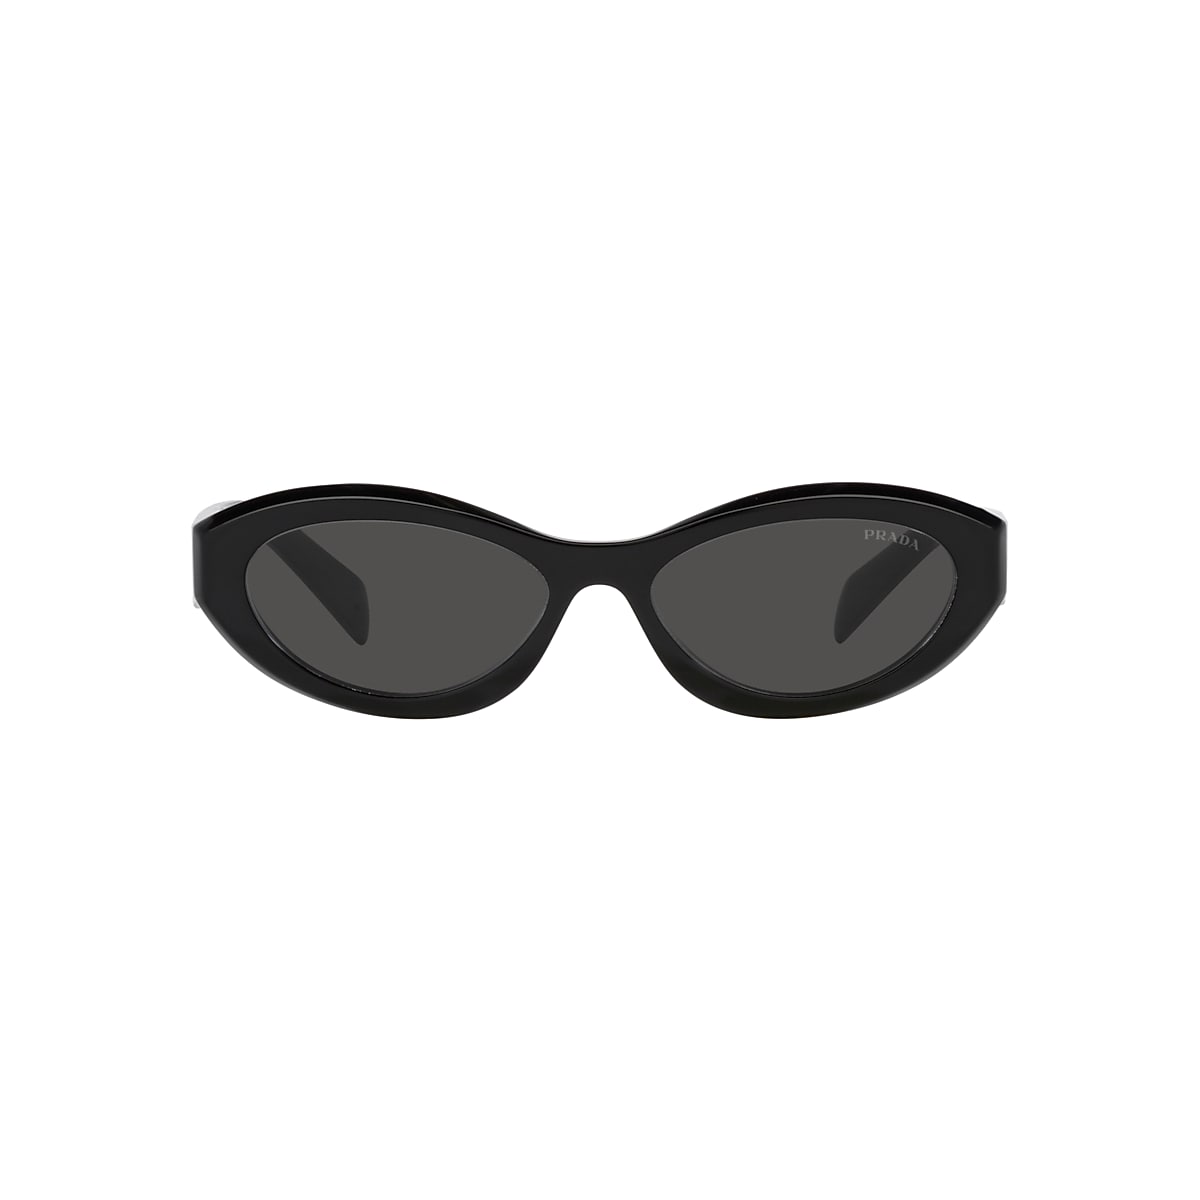 PRADA PR 26ZSF Black - Women Luxury Sunglasses, Dark Grey Lens